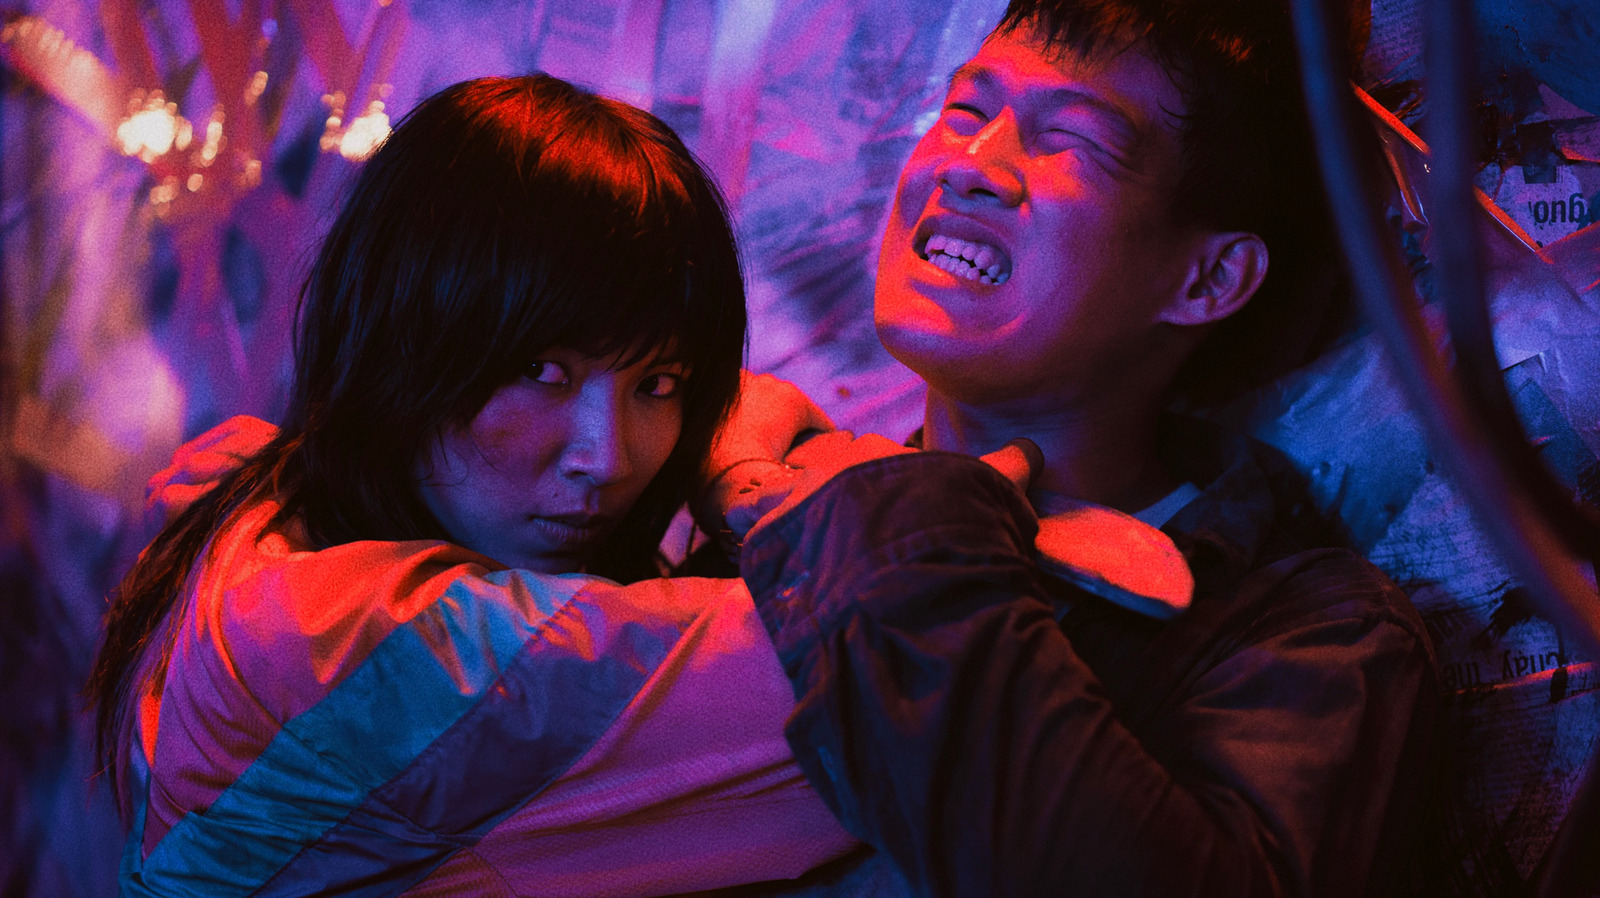 Vietnamese Action Prequel Pummels The Patriarchy [SXSW]